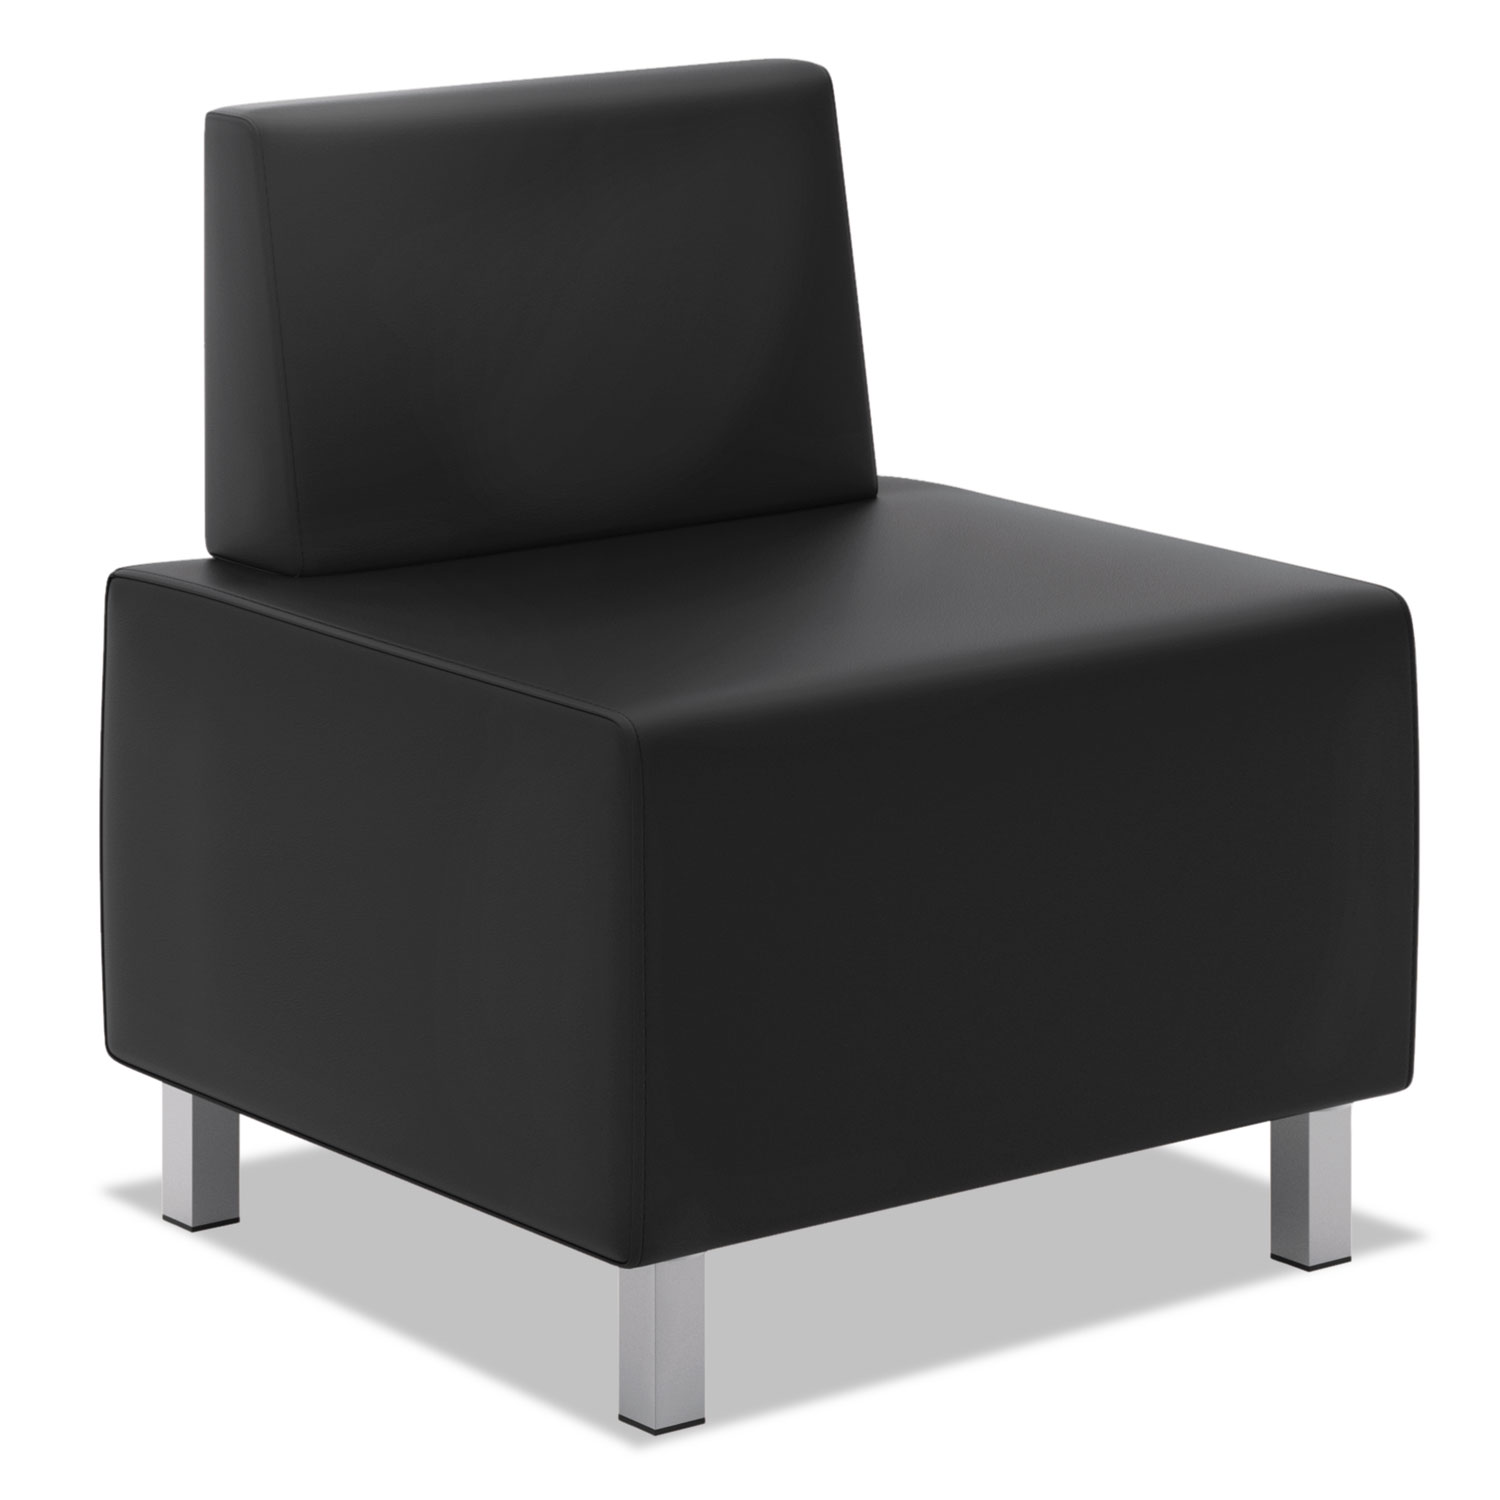  HON HVL864.SB11 HVL860 Series Modular Chair, 25 x 25 x 30.88, Black Seat/Black Back, Silver Base (BSXVL864SB11) 